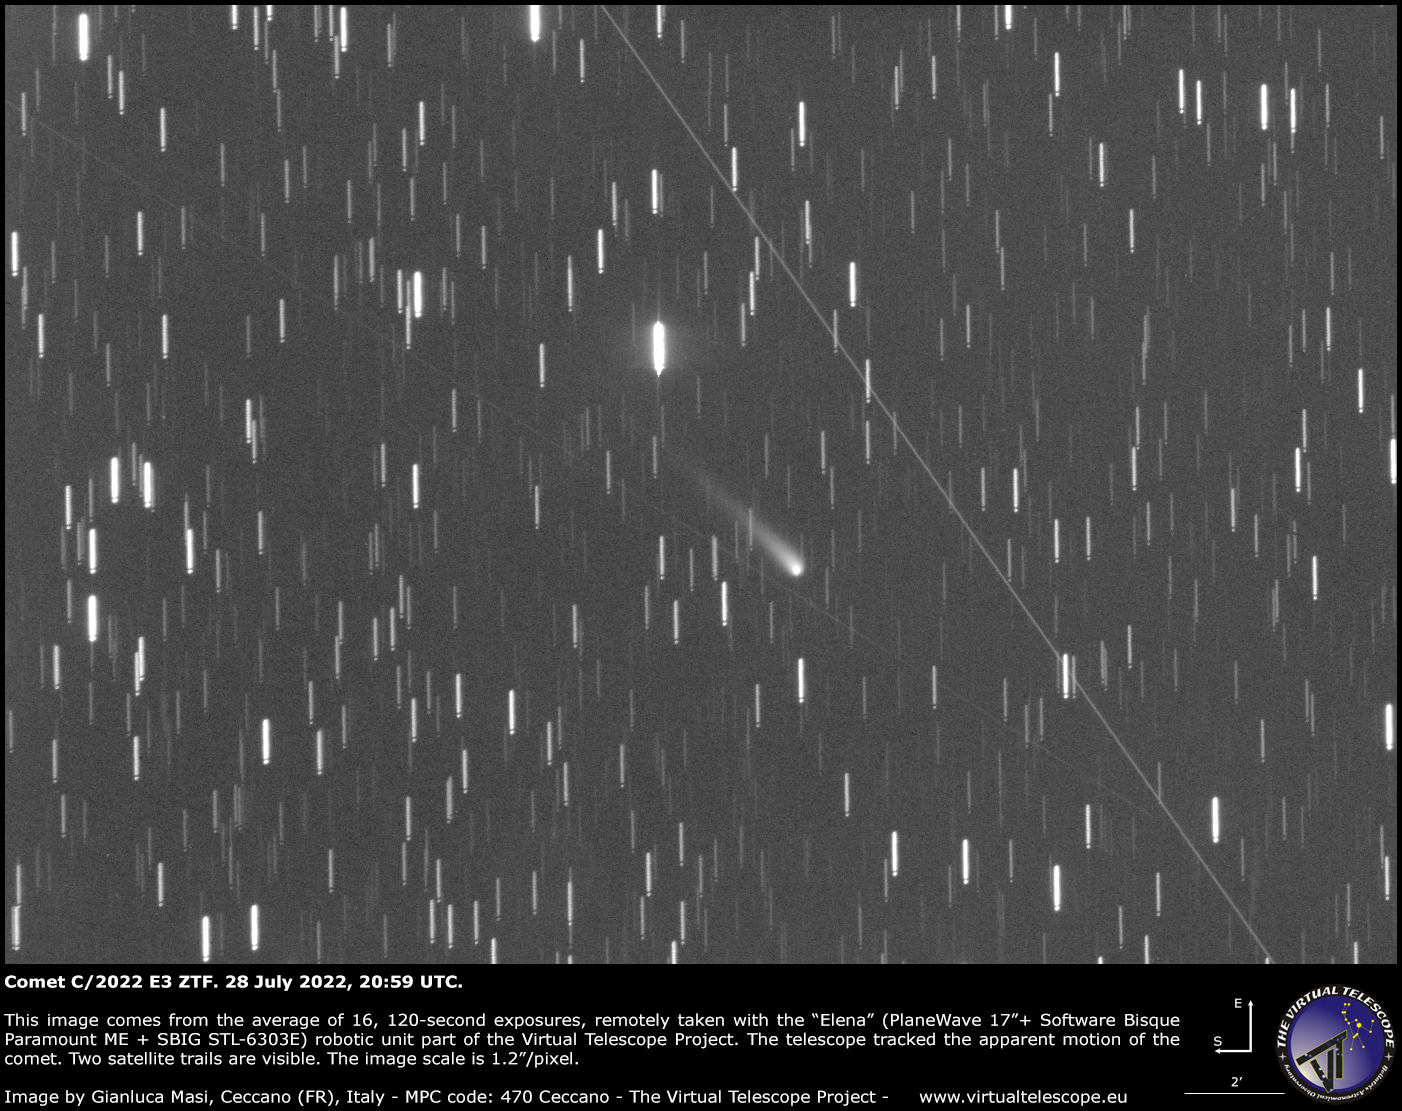 Comet C/2022 E3 ZTF. 28 July 2022.